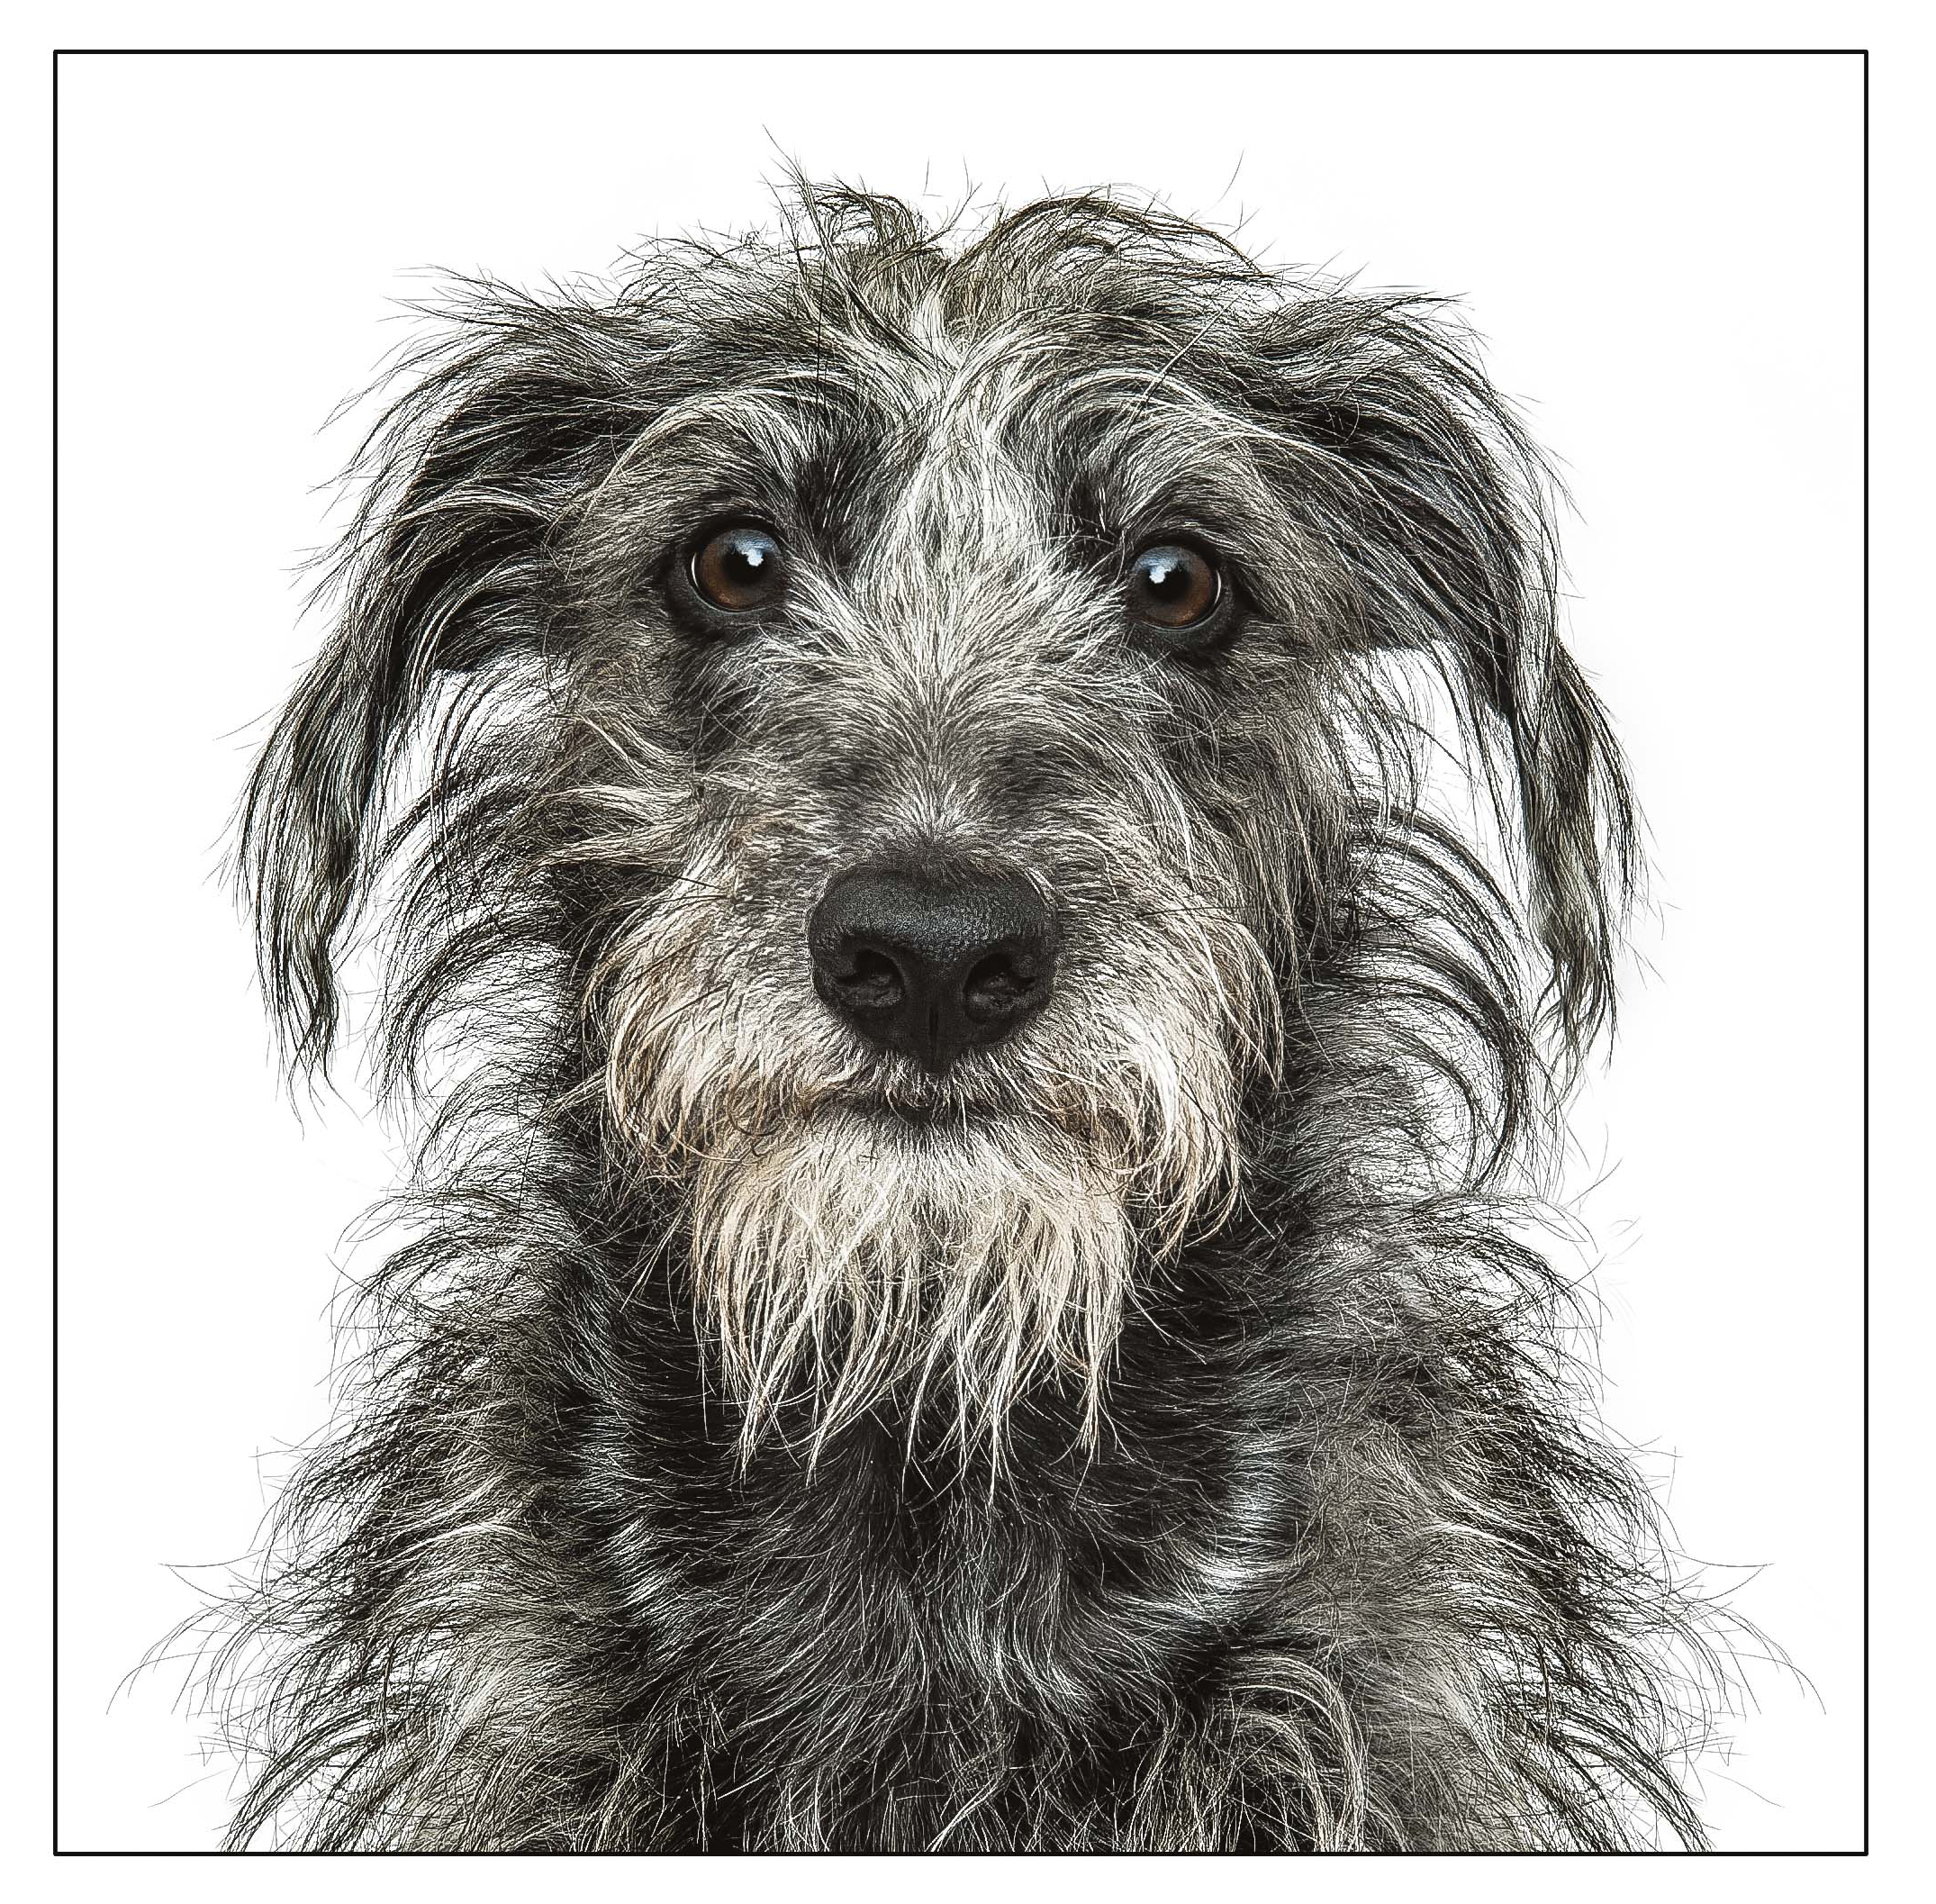 Above: A Whiplington terrier design from Gruff Pawtraits.